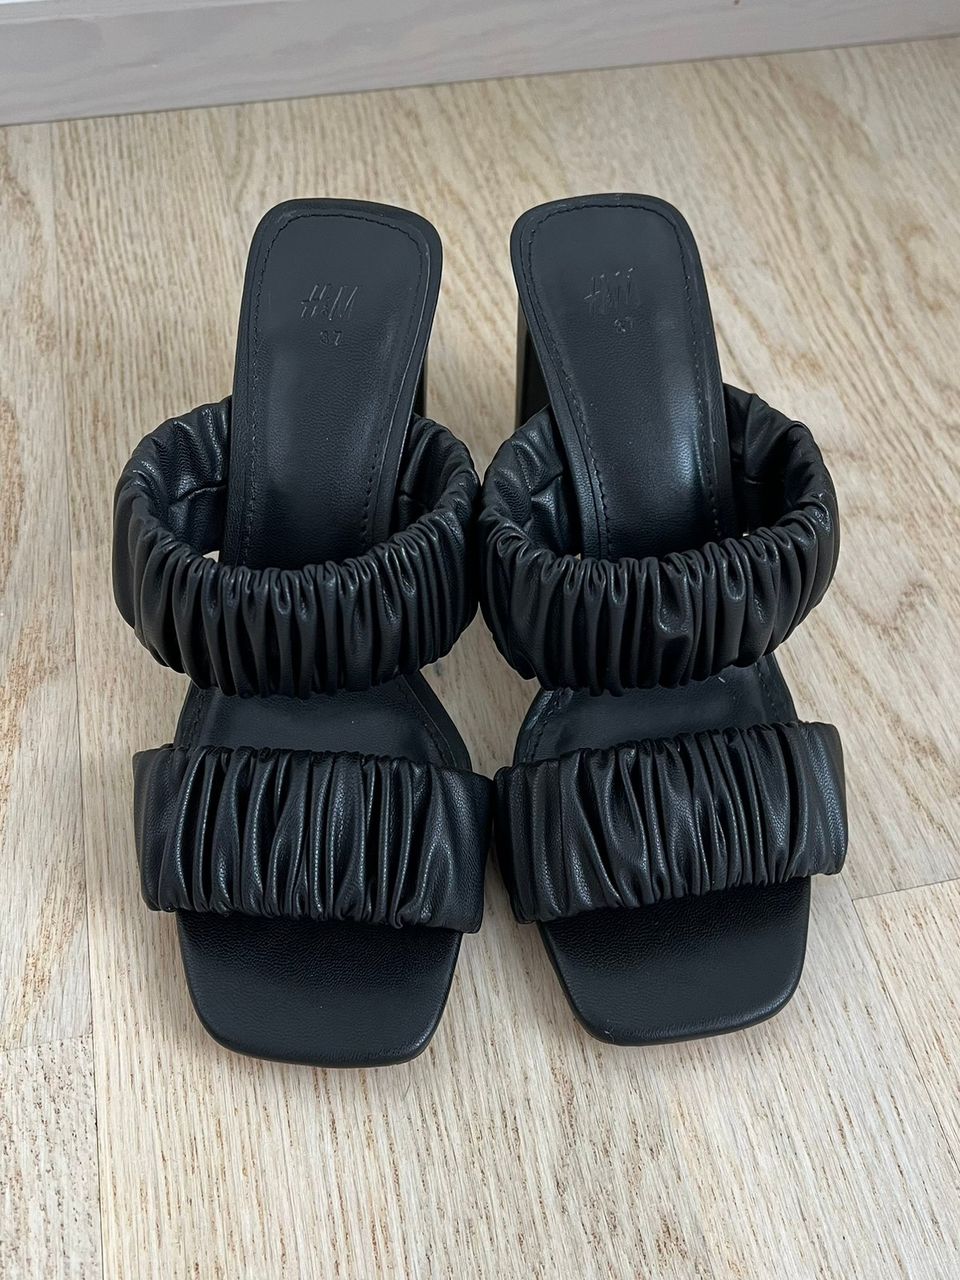 H&M mustat sandaletit / korkokengät (37)